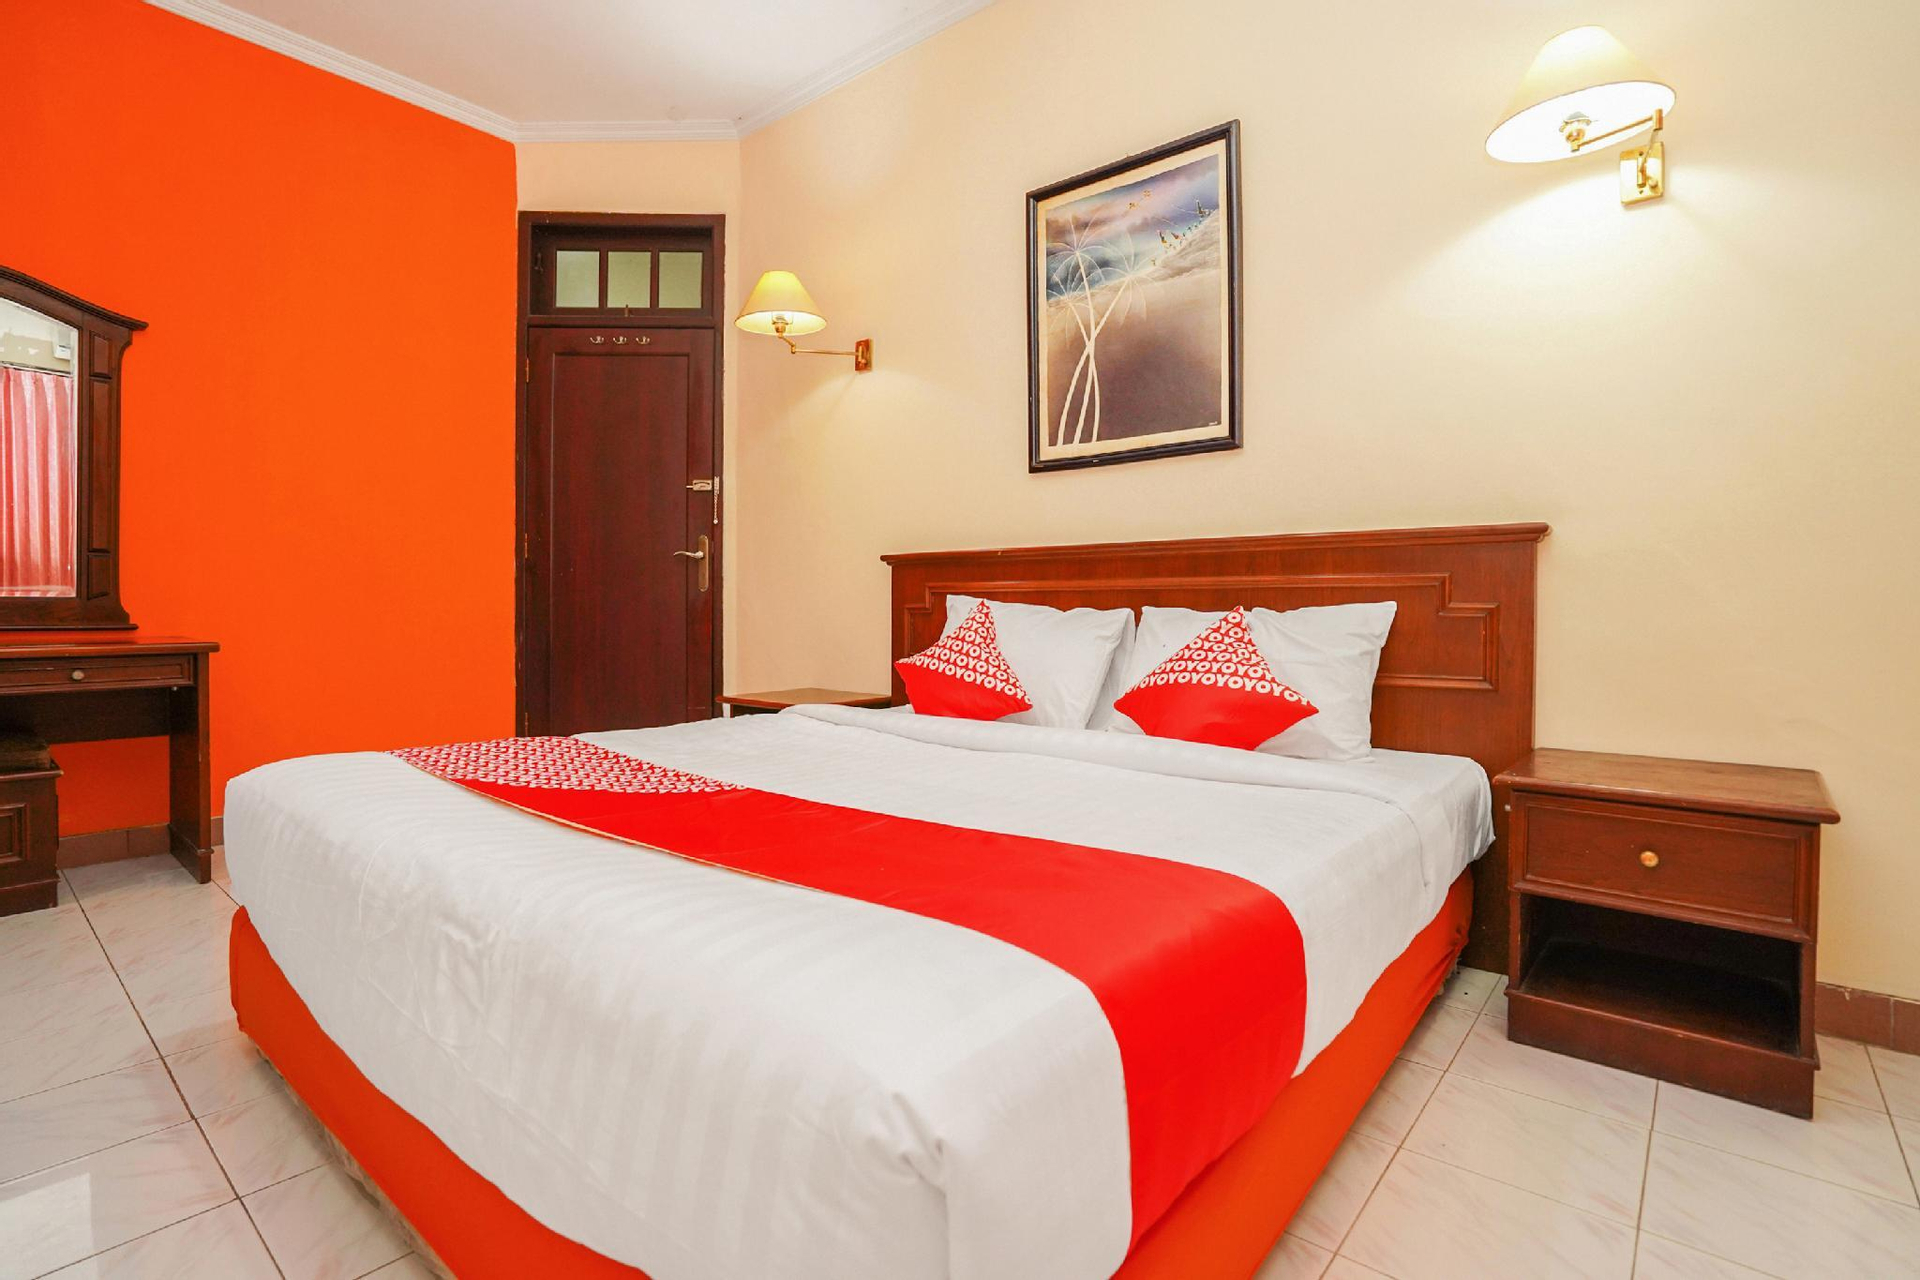 Bedroom 4, OYO 1225 Hotel Dibino, Surabaya